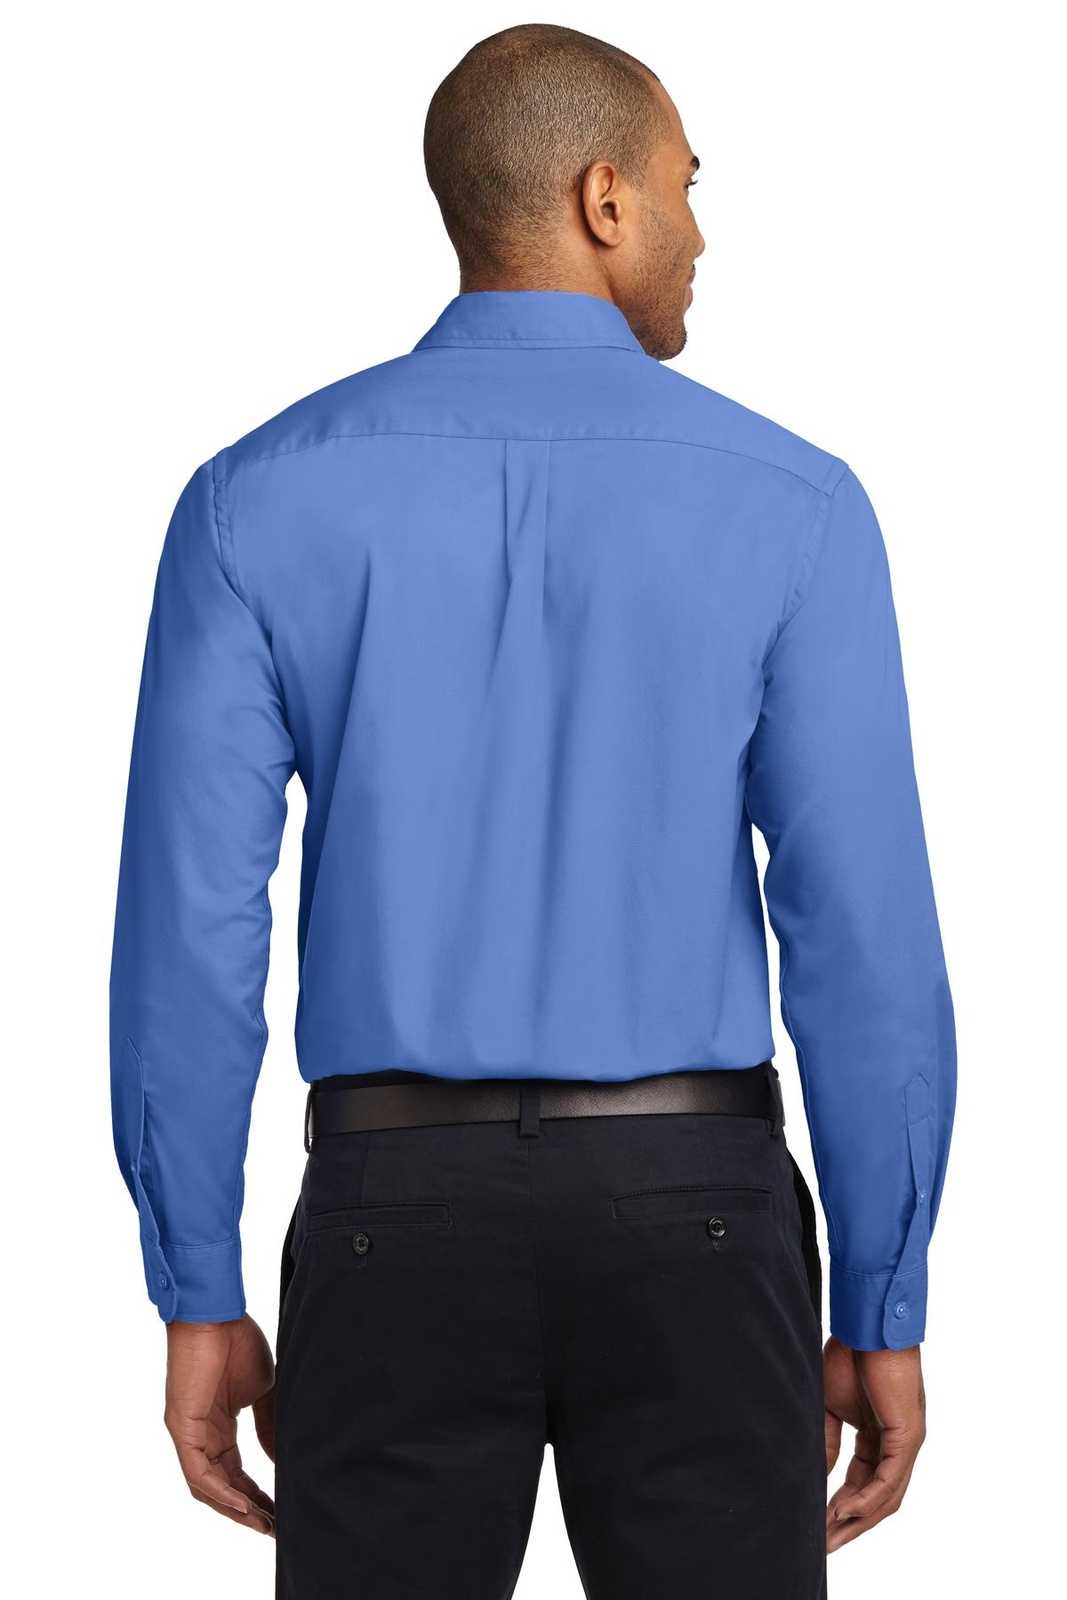 Port Authority S608 Long Sleeve Easy Care Shirt - Ultramarine Blue - HIT a Double - 1